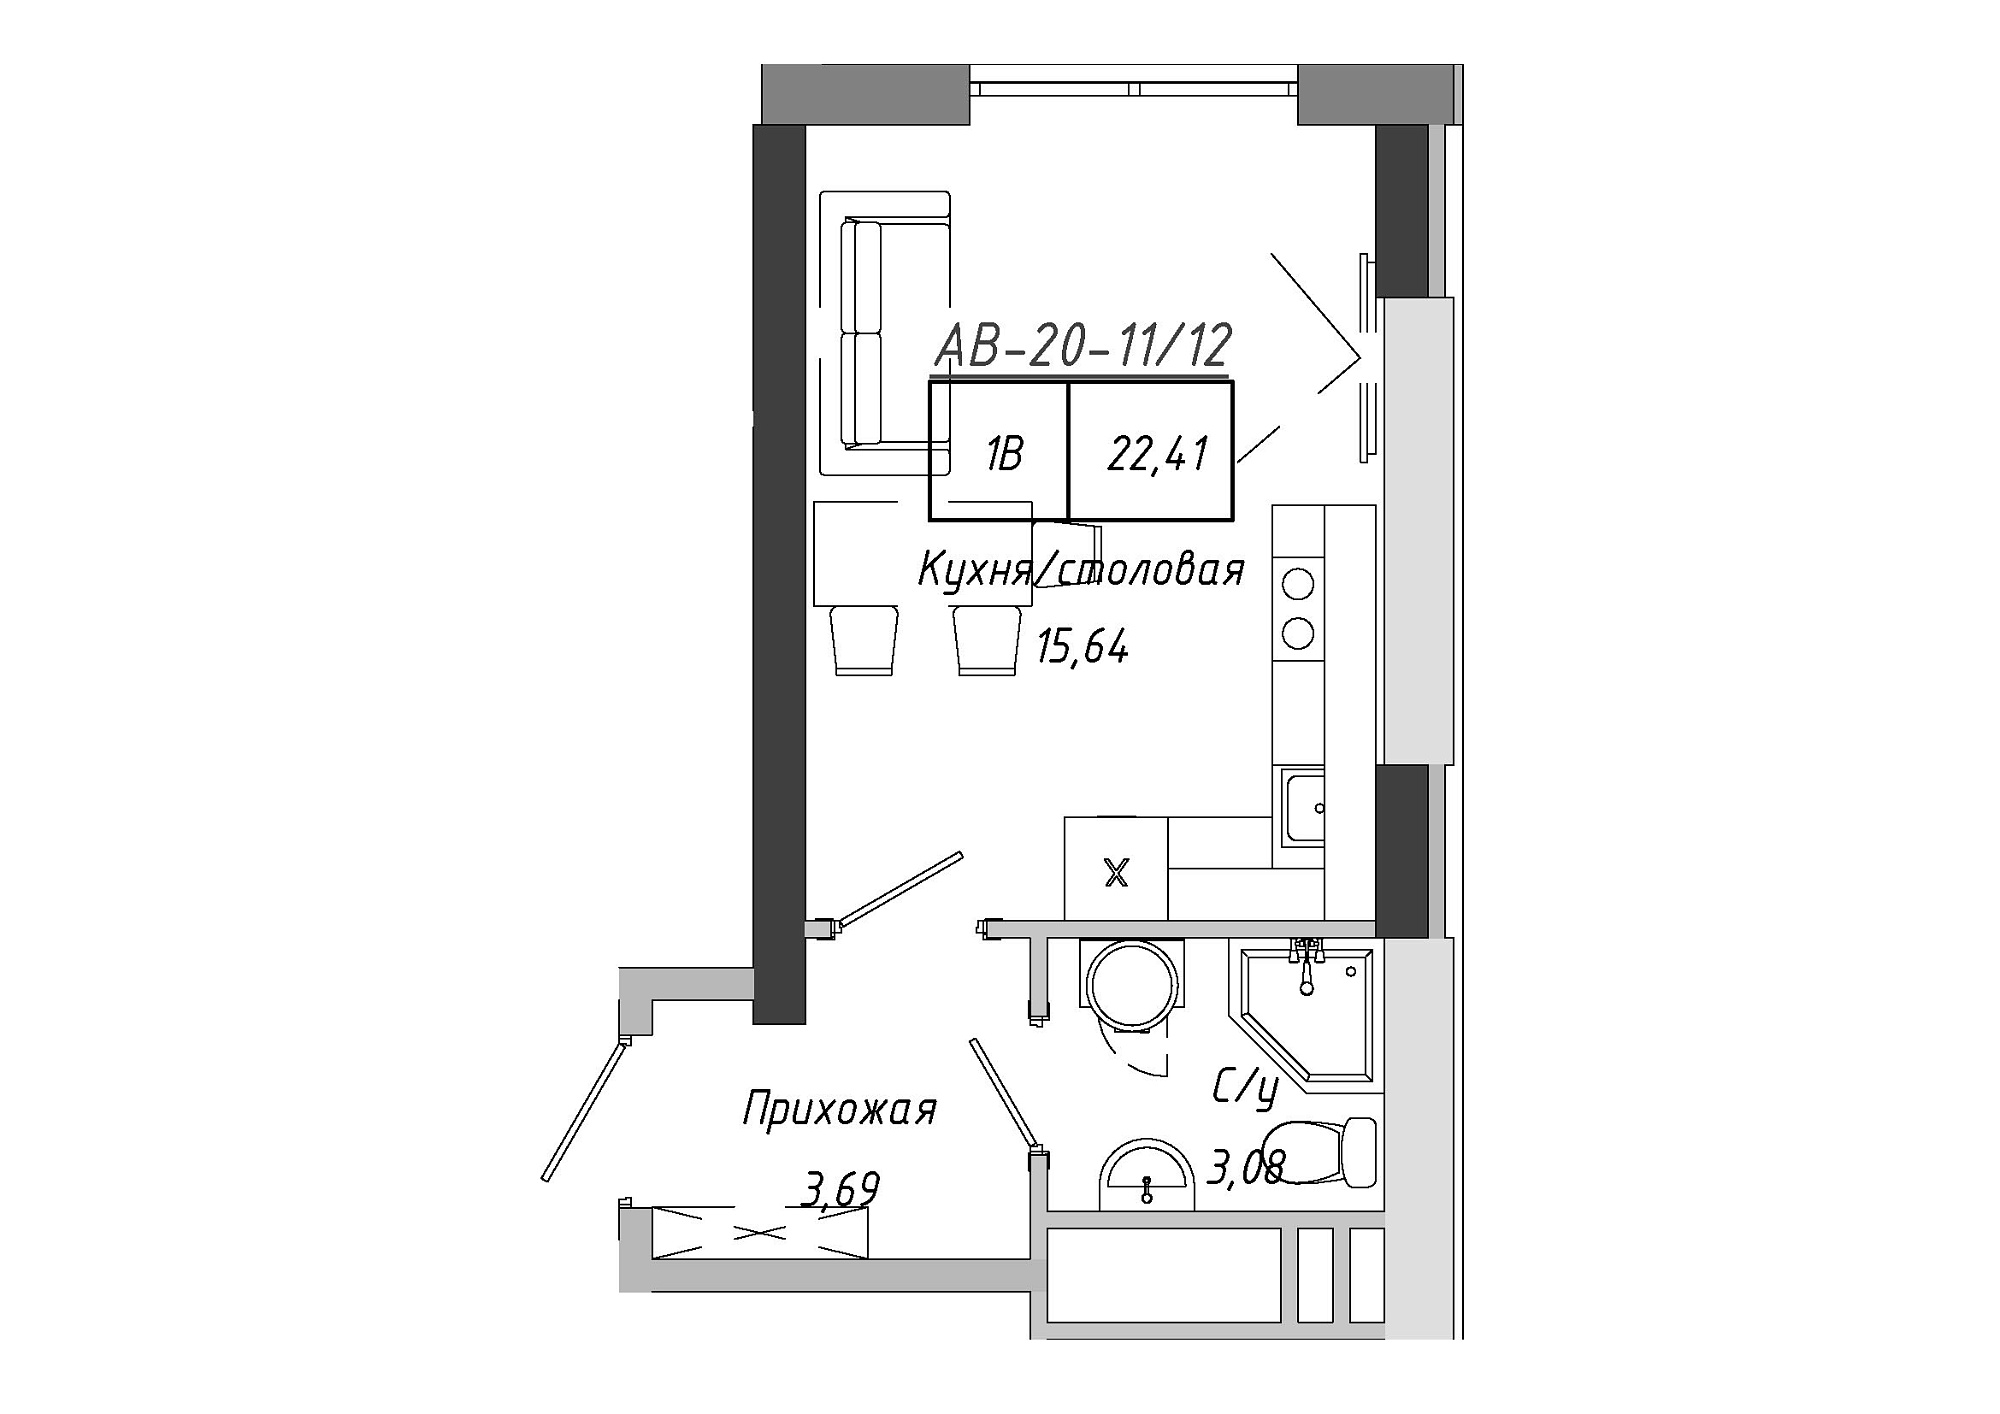 Planning Smart flats area 21.87m2, AB-20-11/00012.